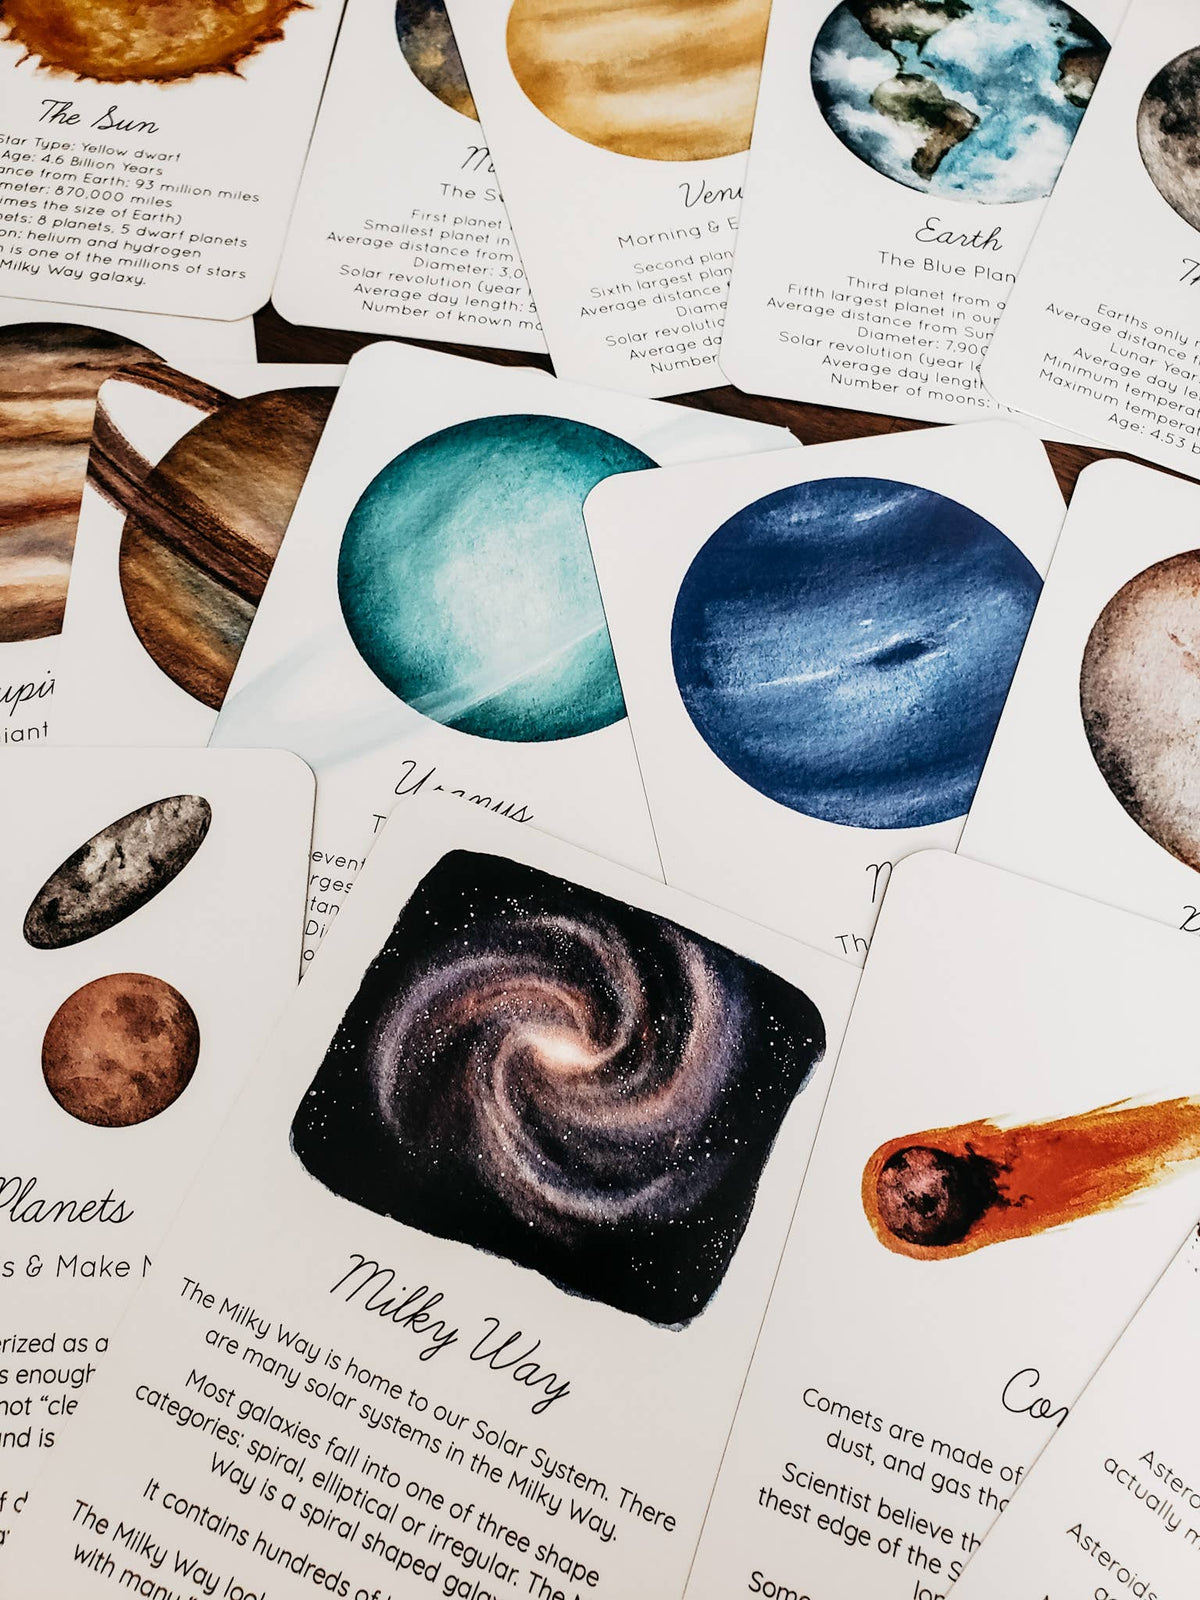 Solar System Flashcards - Set of 15 Cards